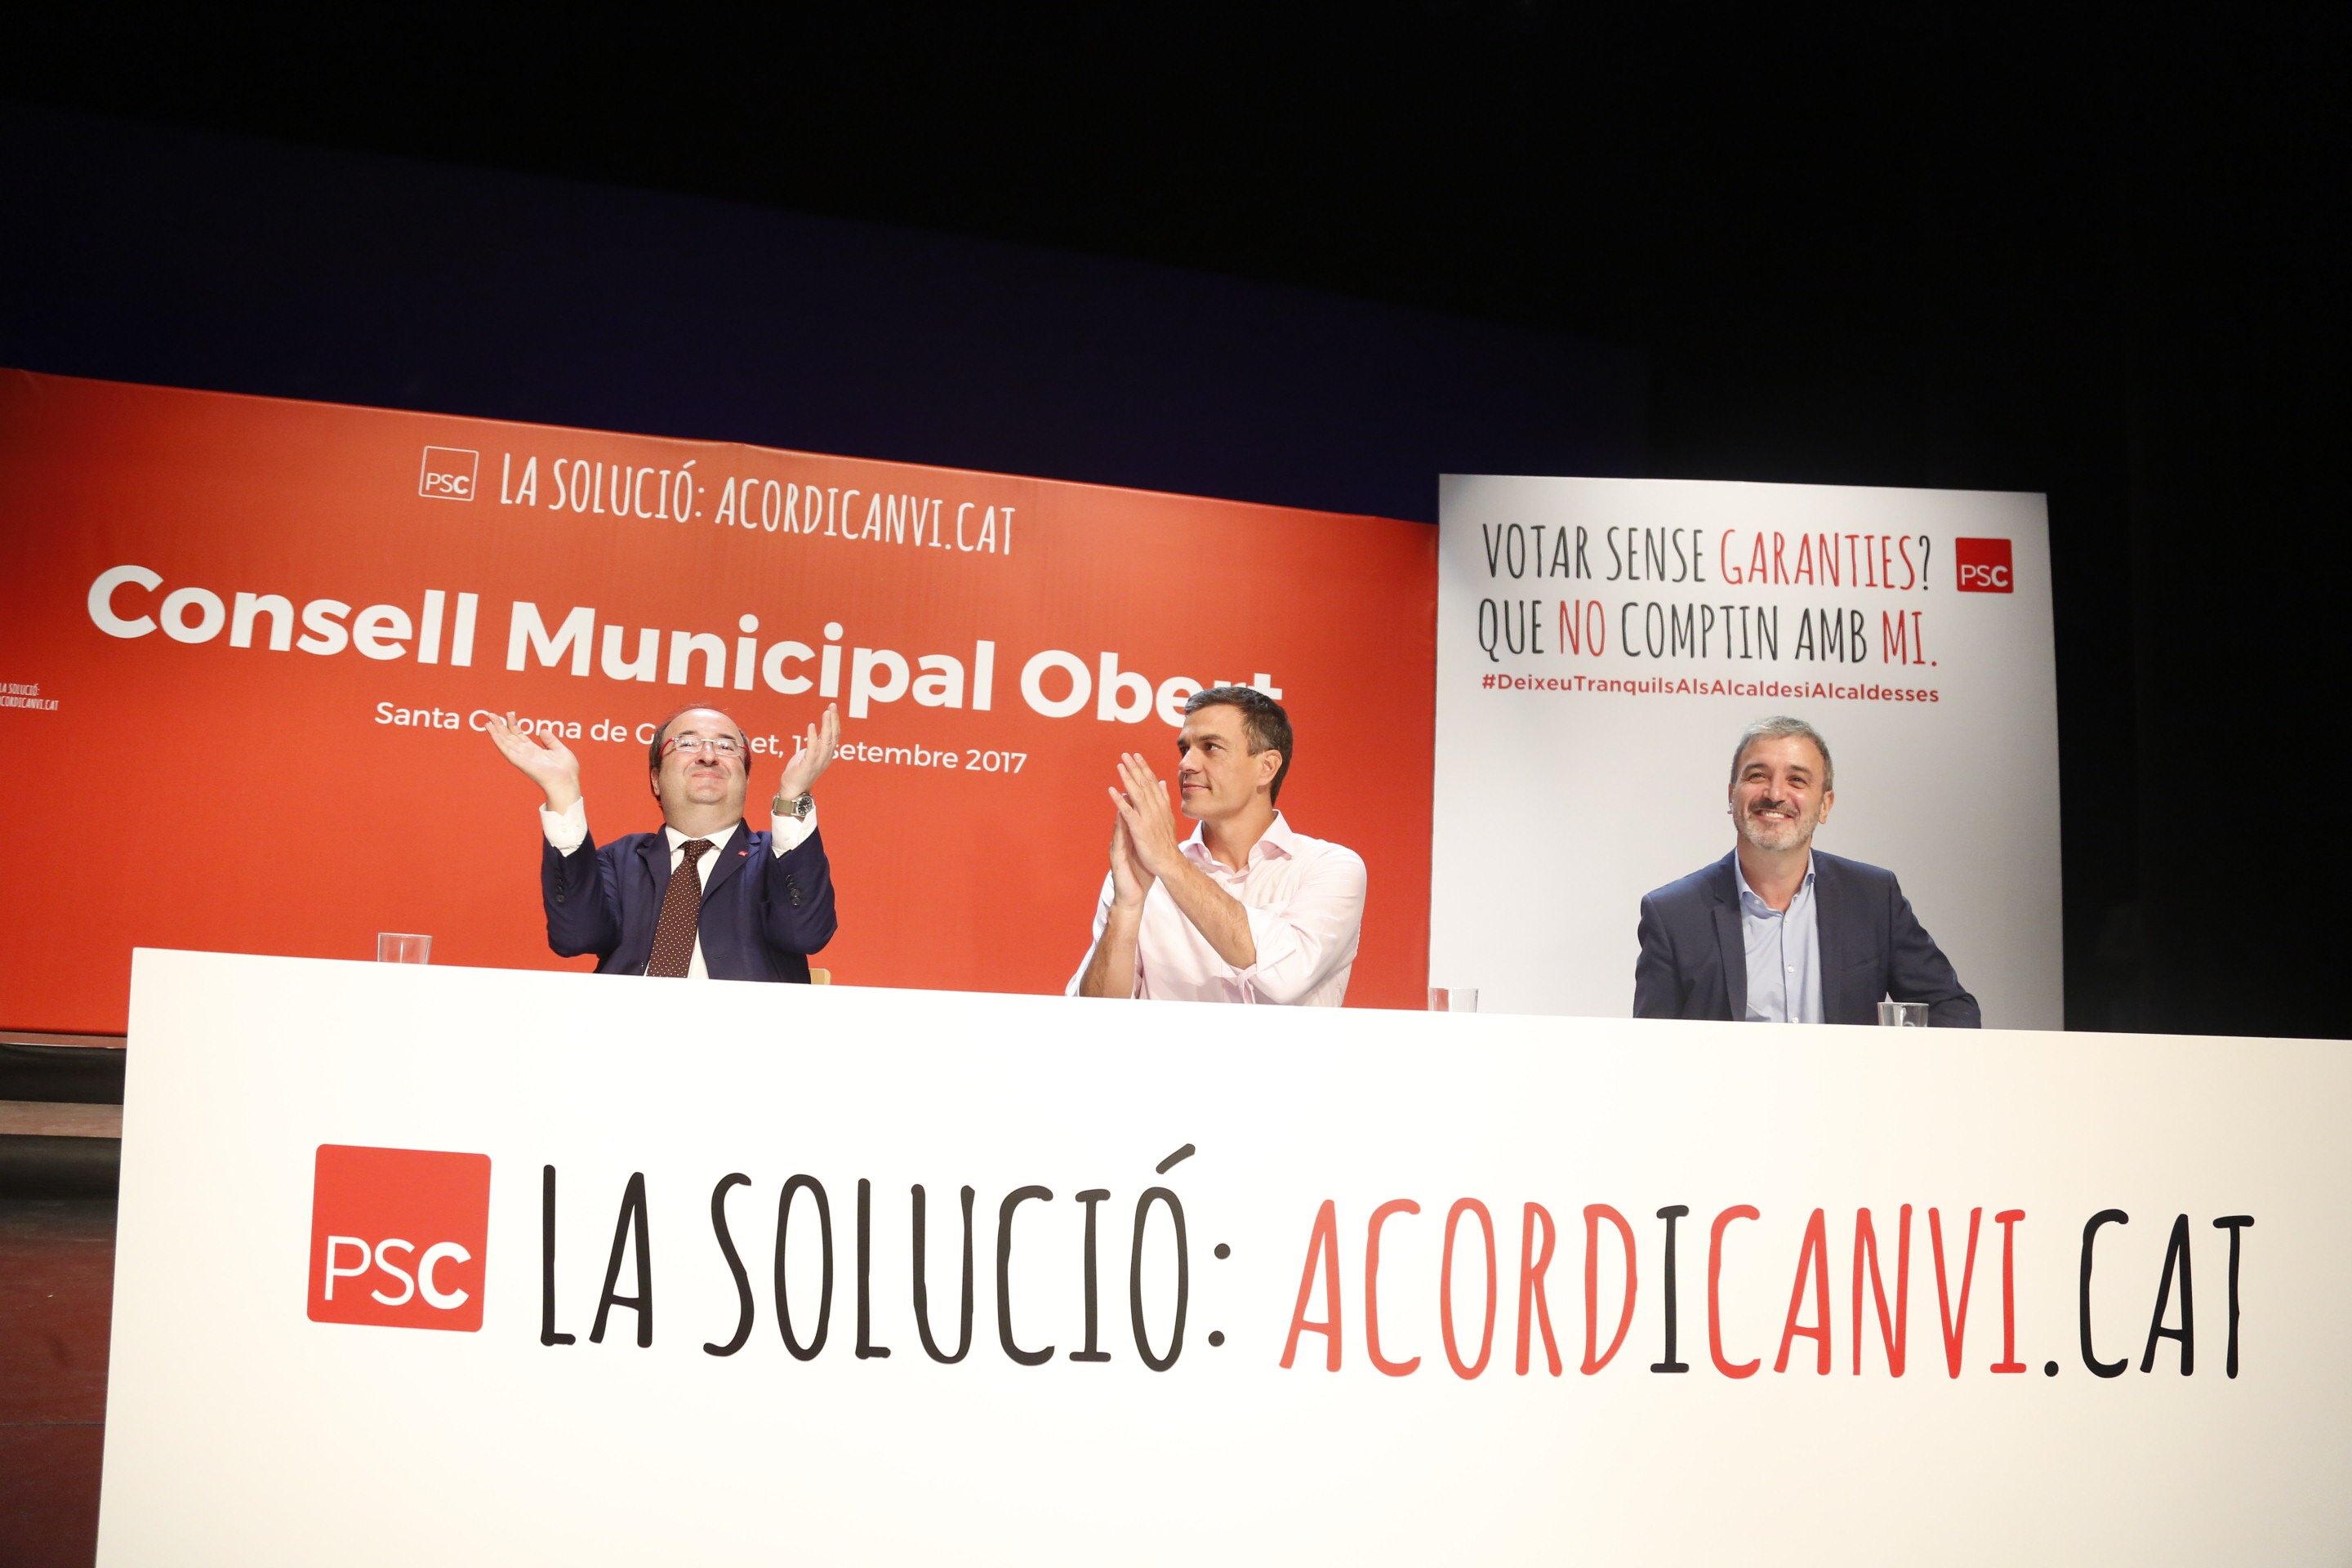 El PSC acusa a Puigdemont de poner a los alcaldes "en el disparadero"